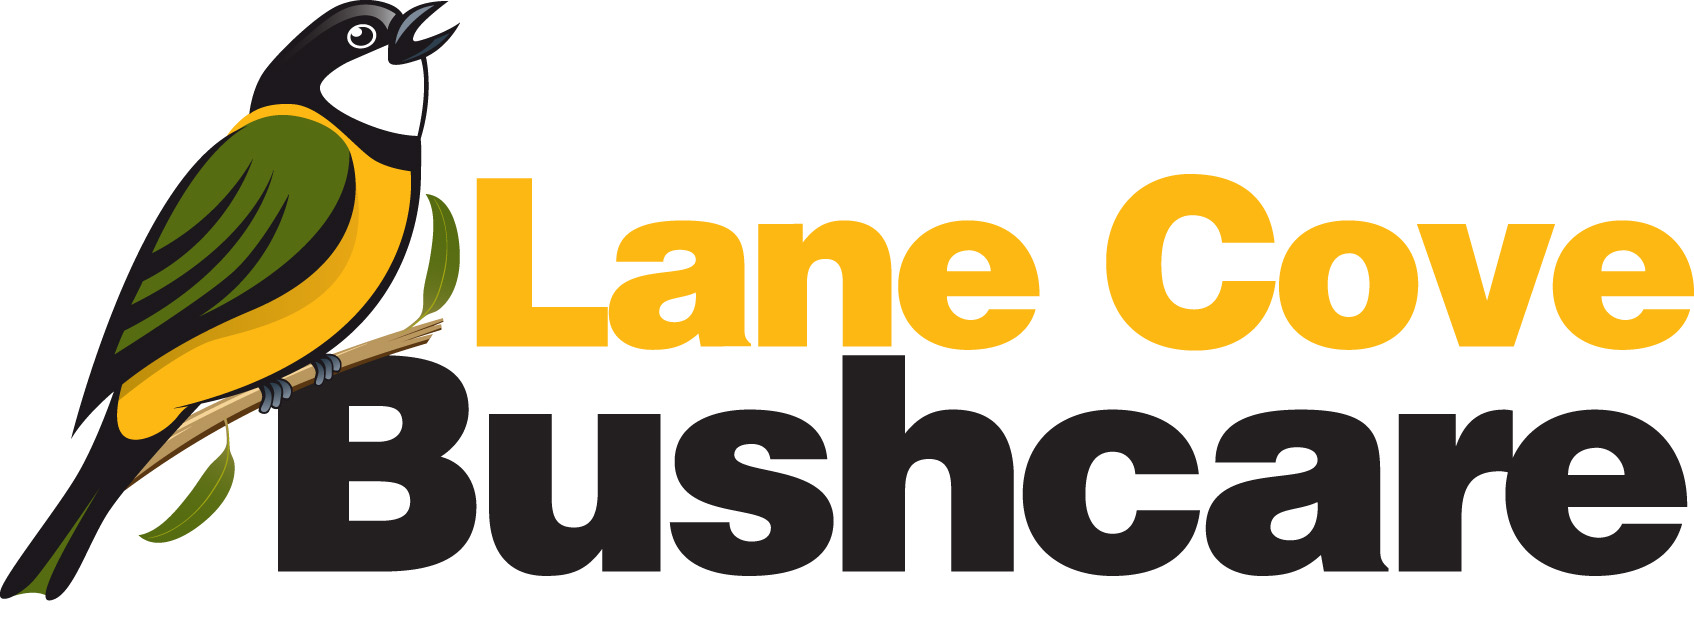 LCBushcare_logo.jpg